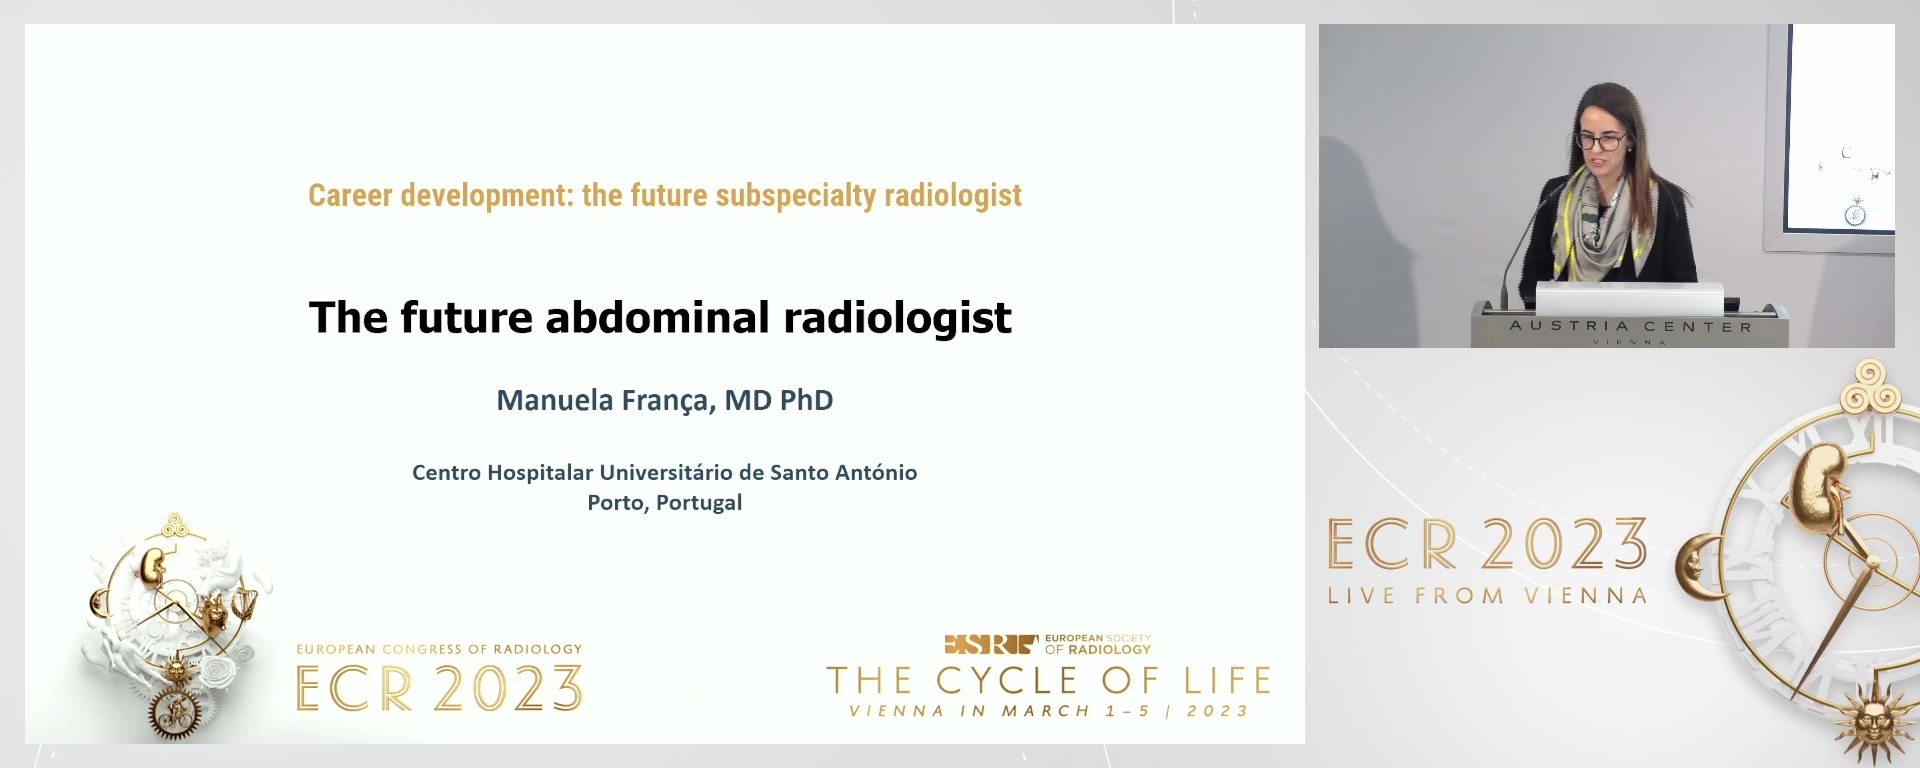 The future abdominal radiologist